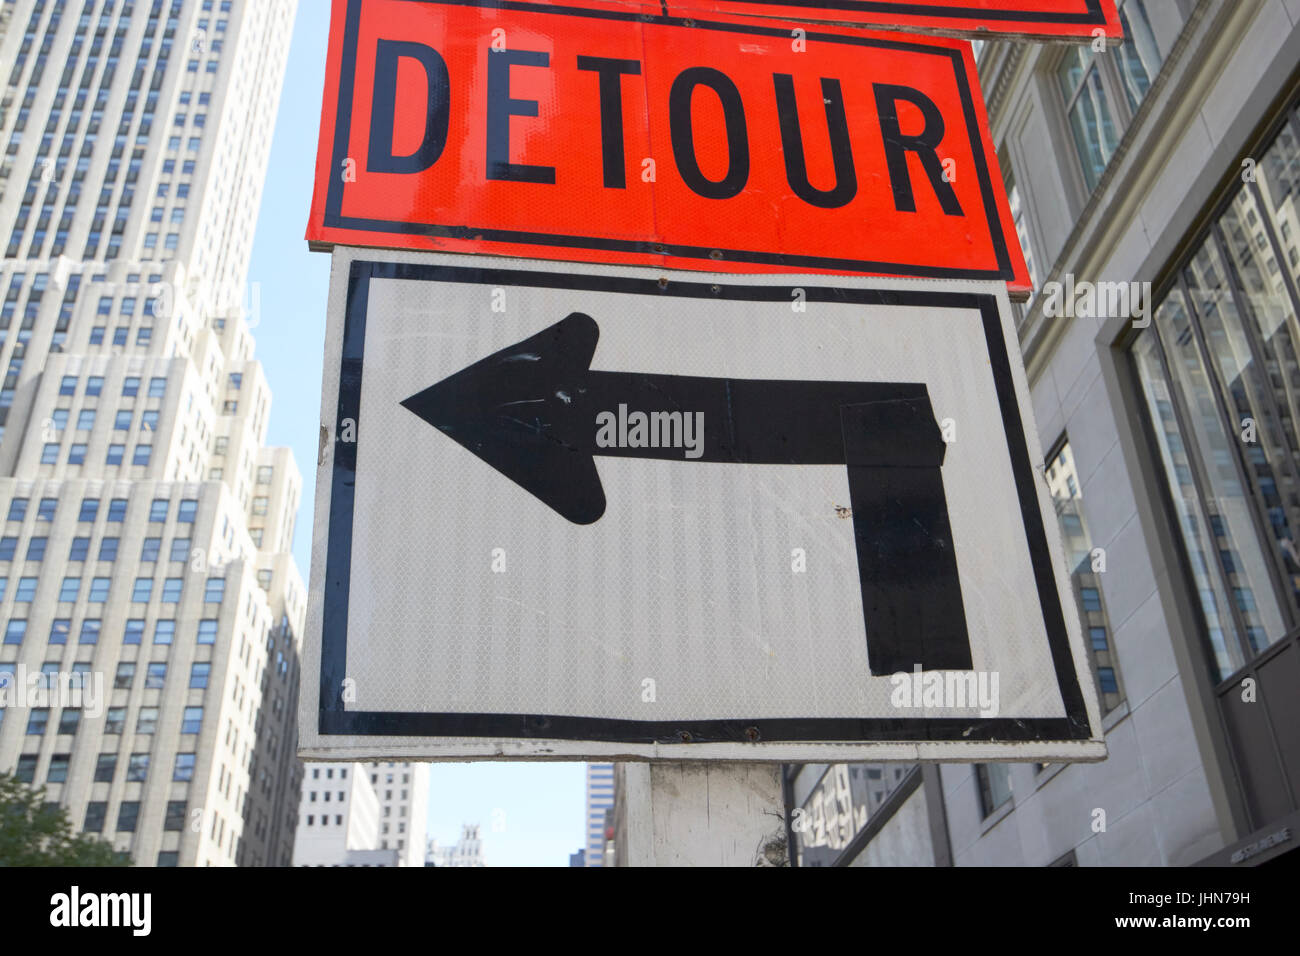 detour sign with left turn arrow midtown New York City USA Stock Photo